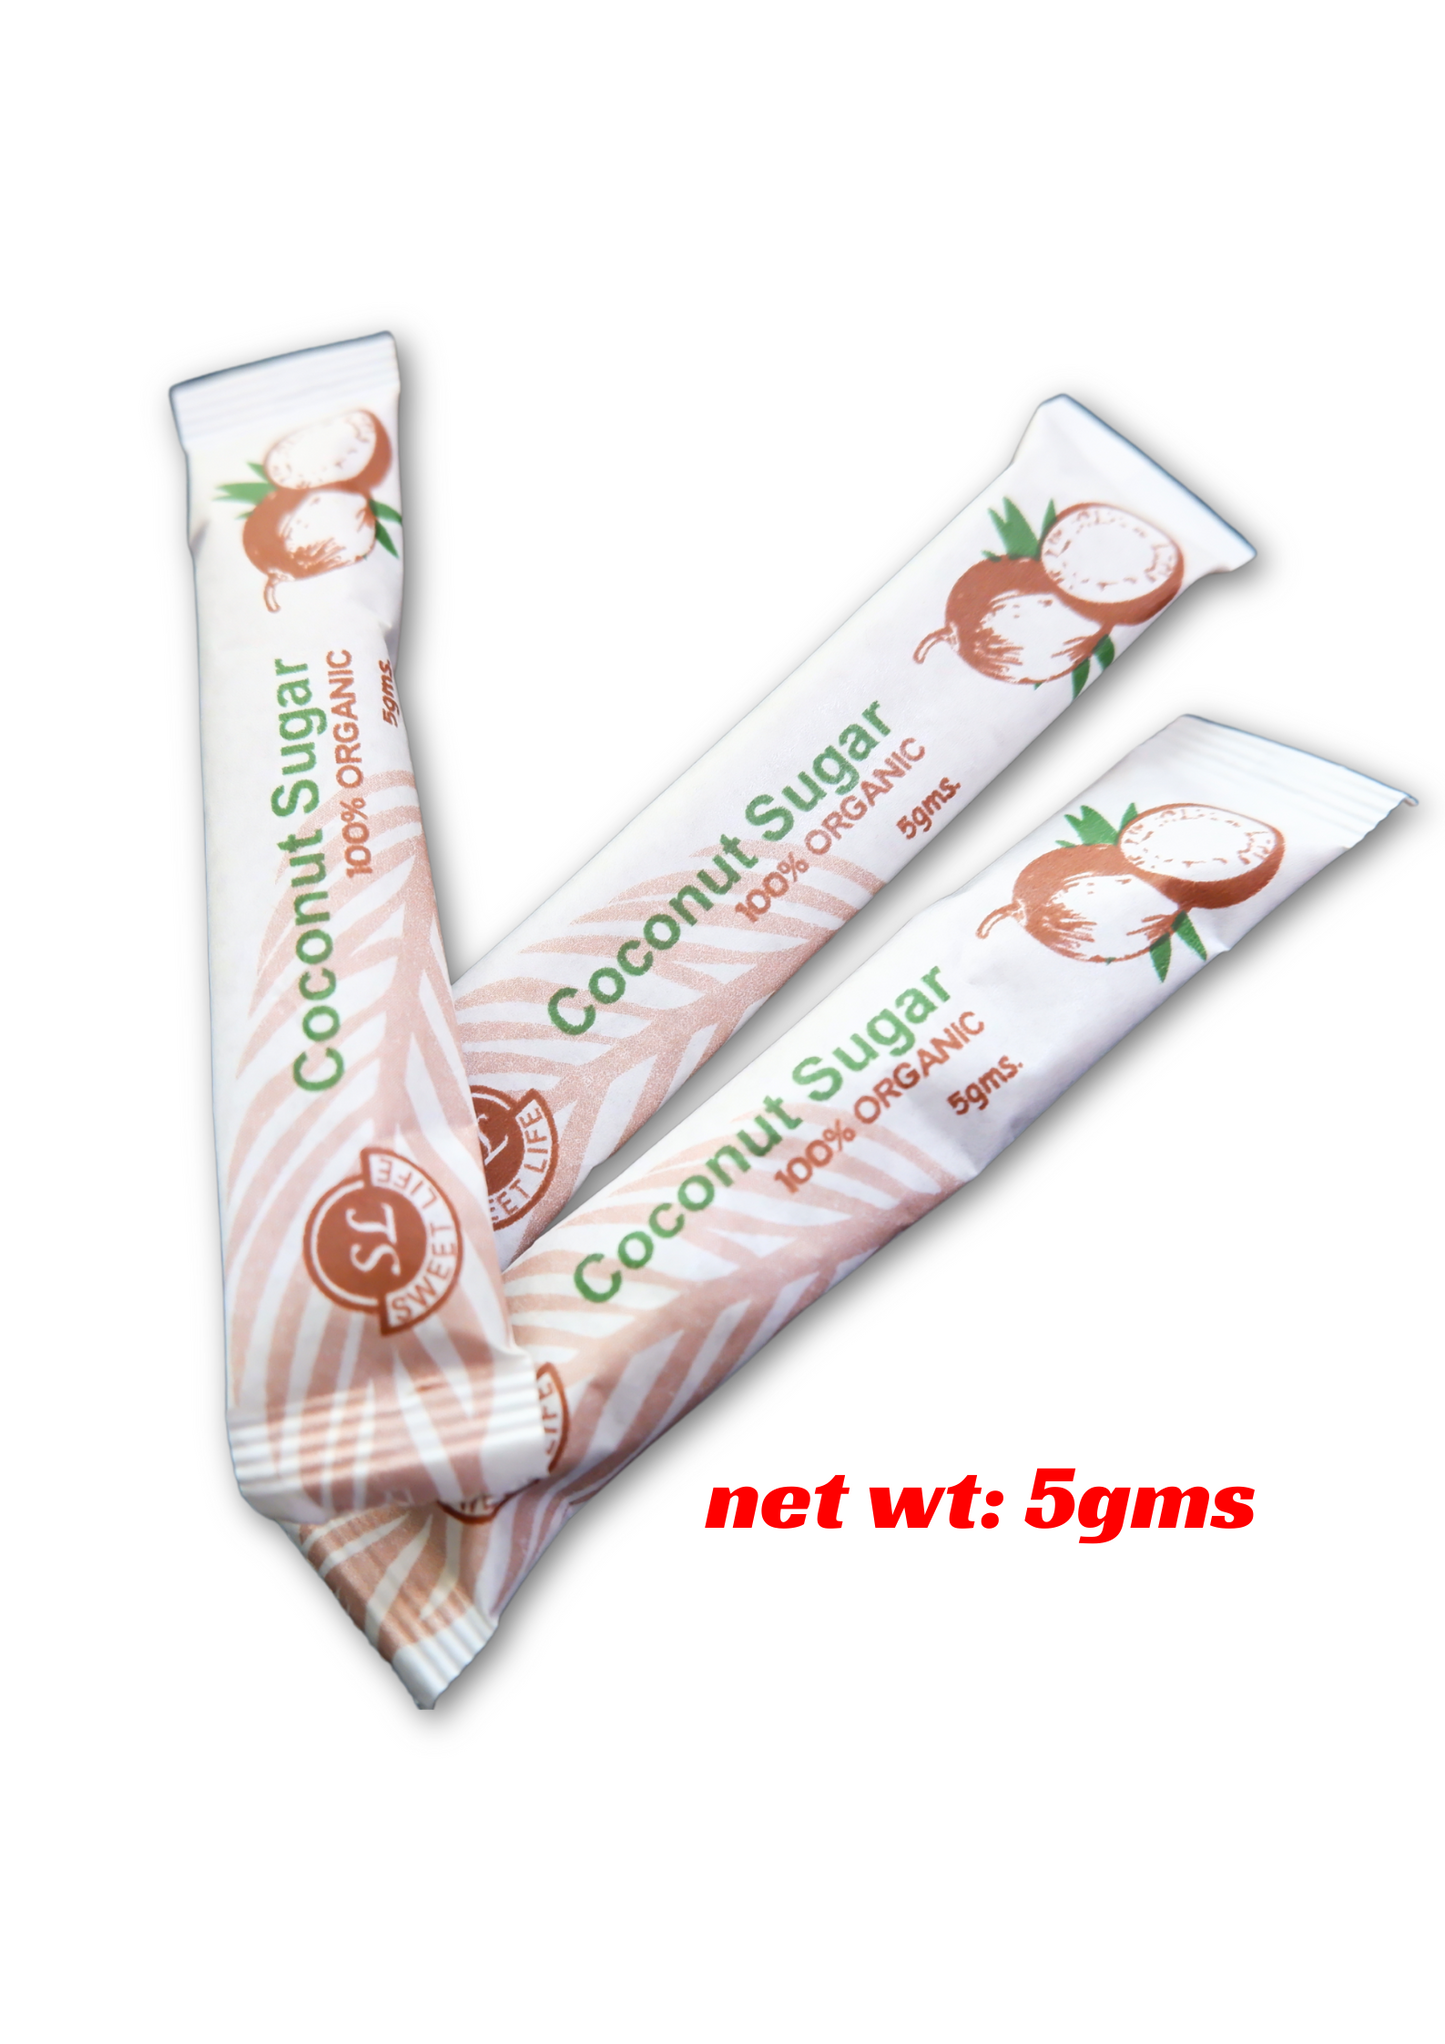 COCONUT SWEETENER Sticks 5grams